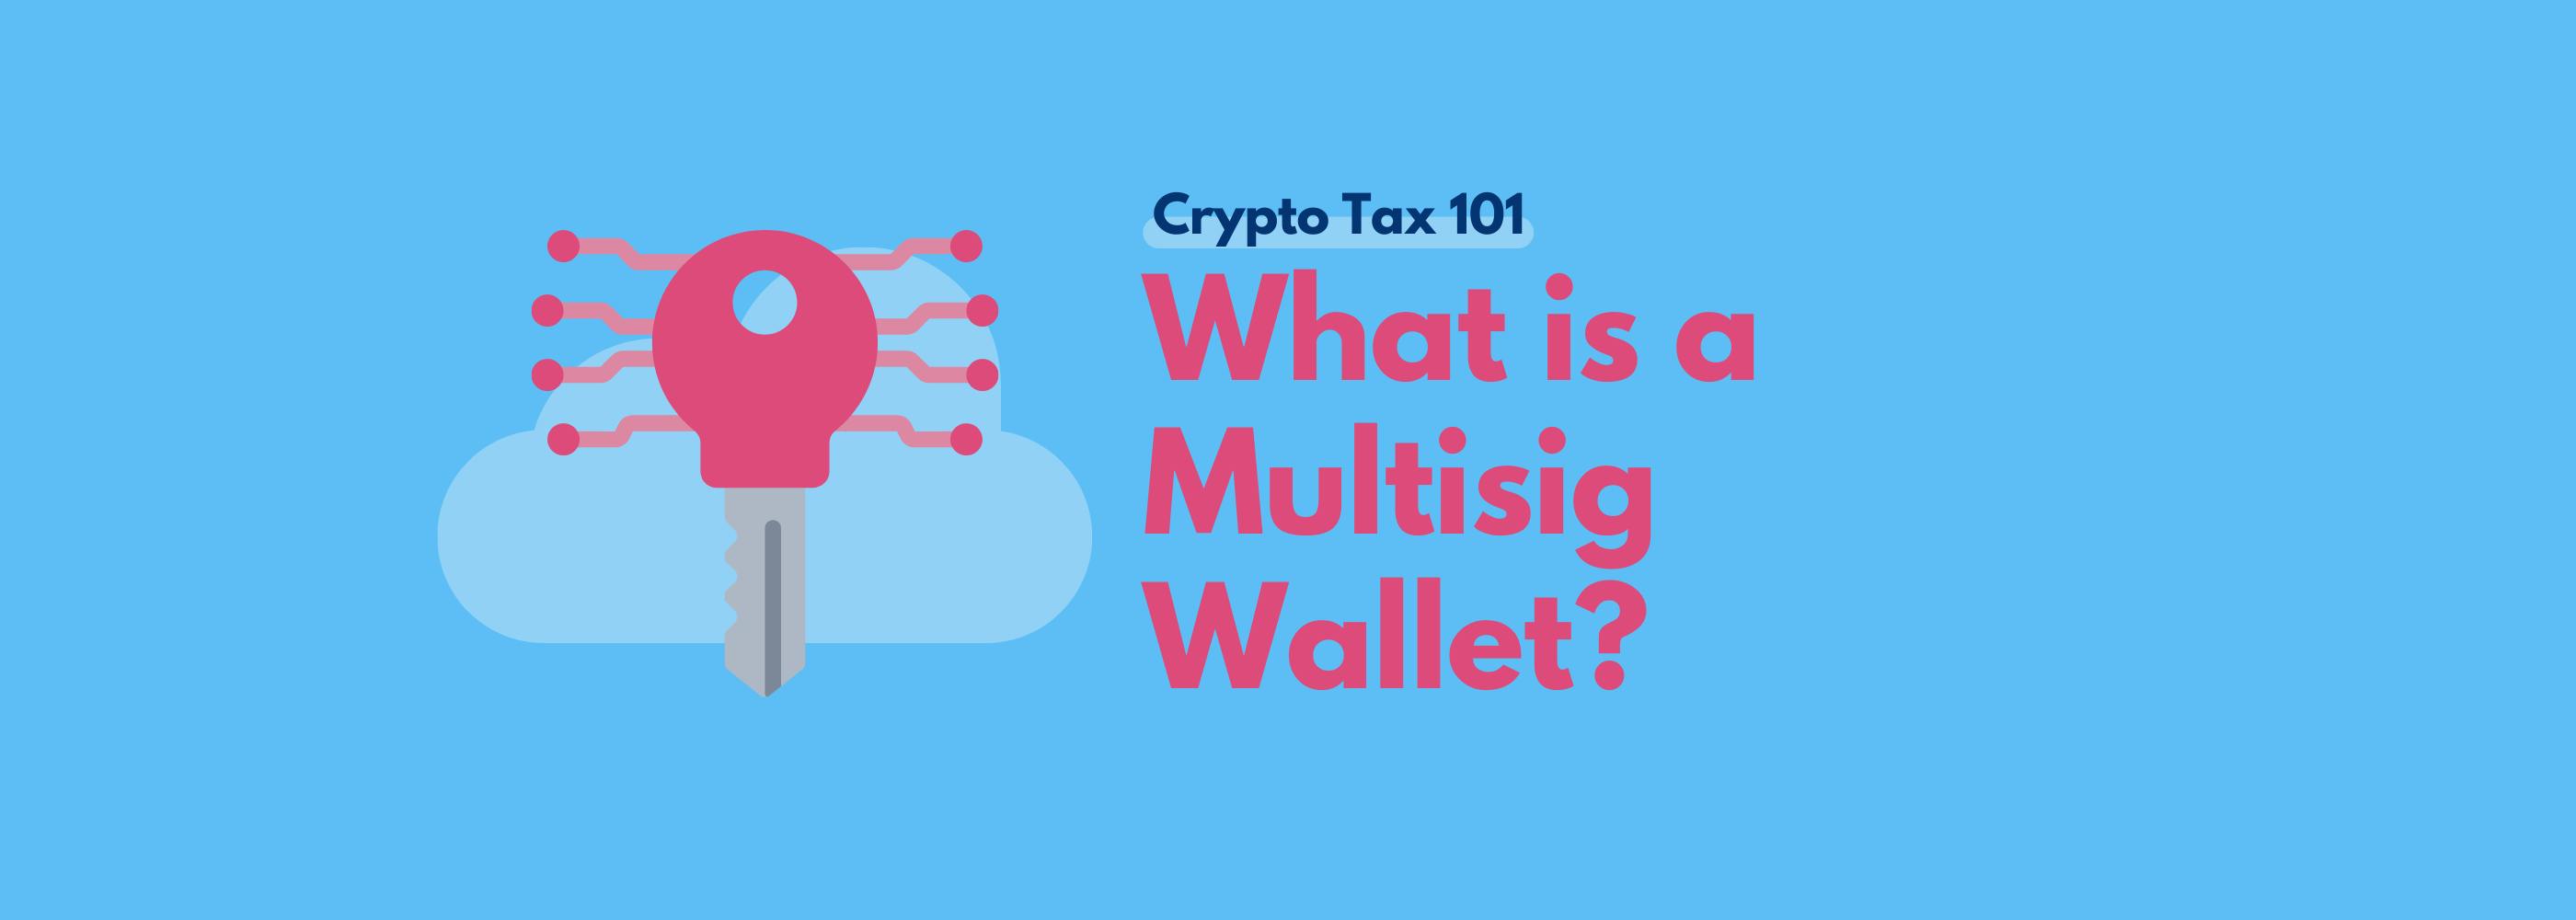 Multisig wallet guide